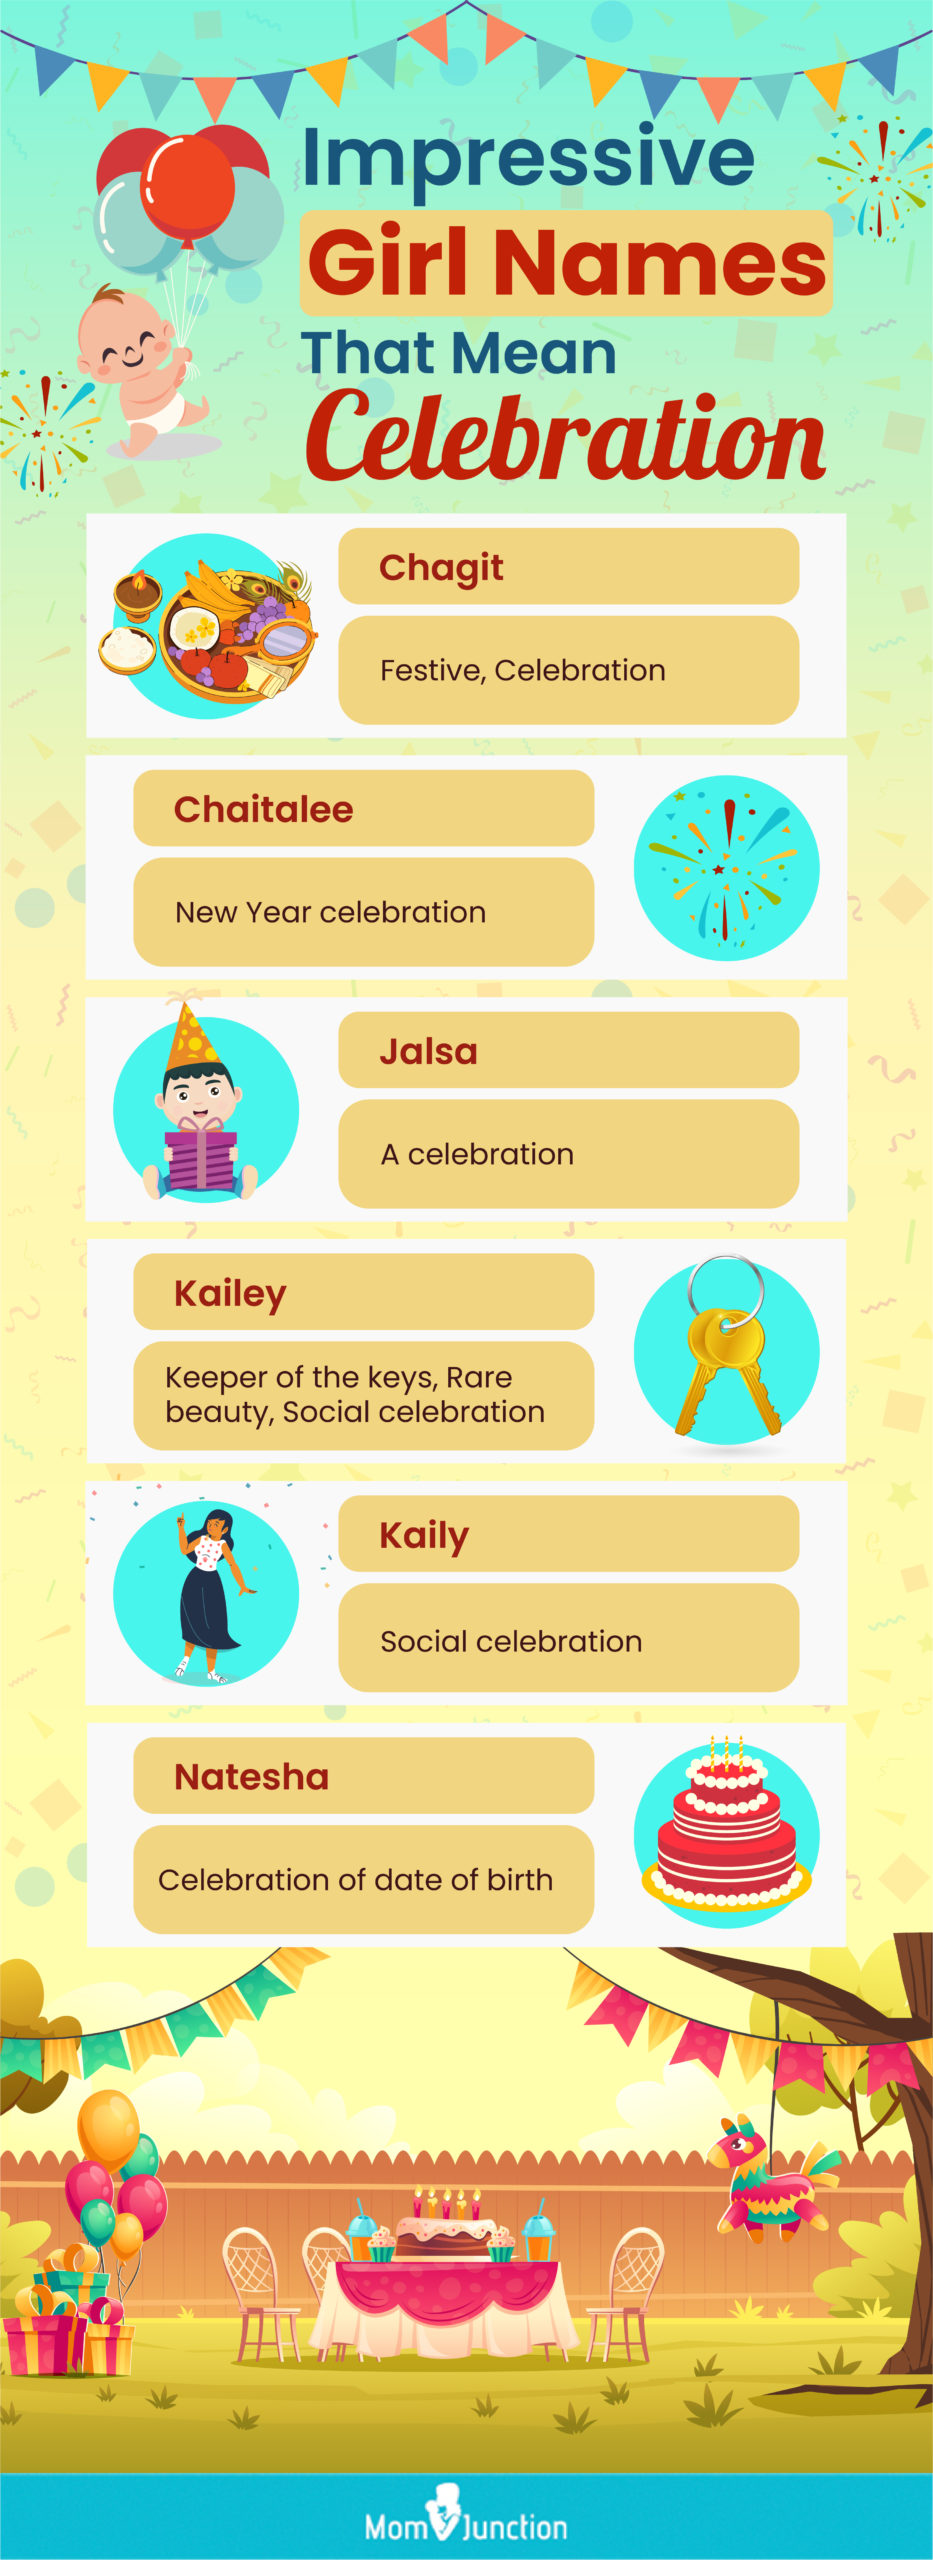 impressive girl names that mean celebration (infographic)